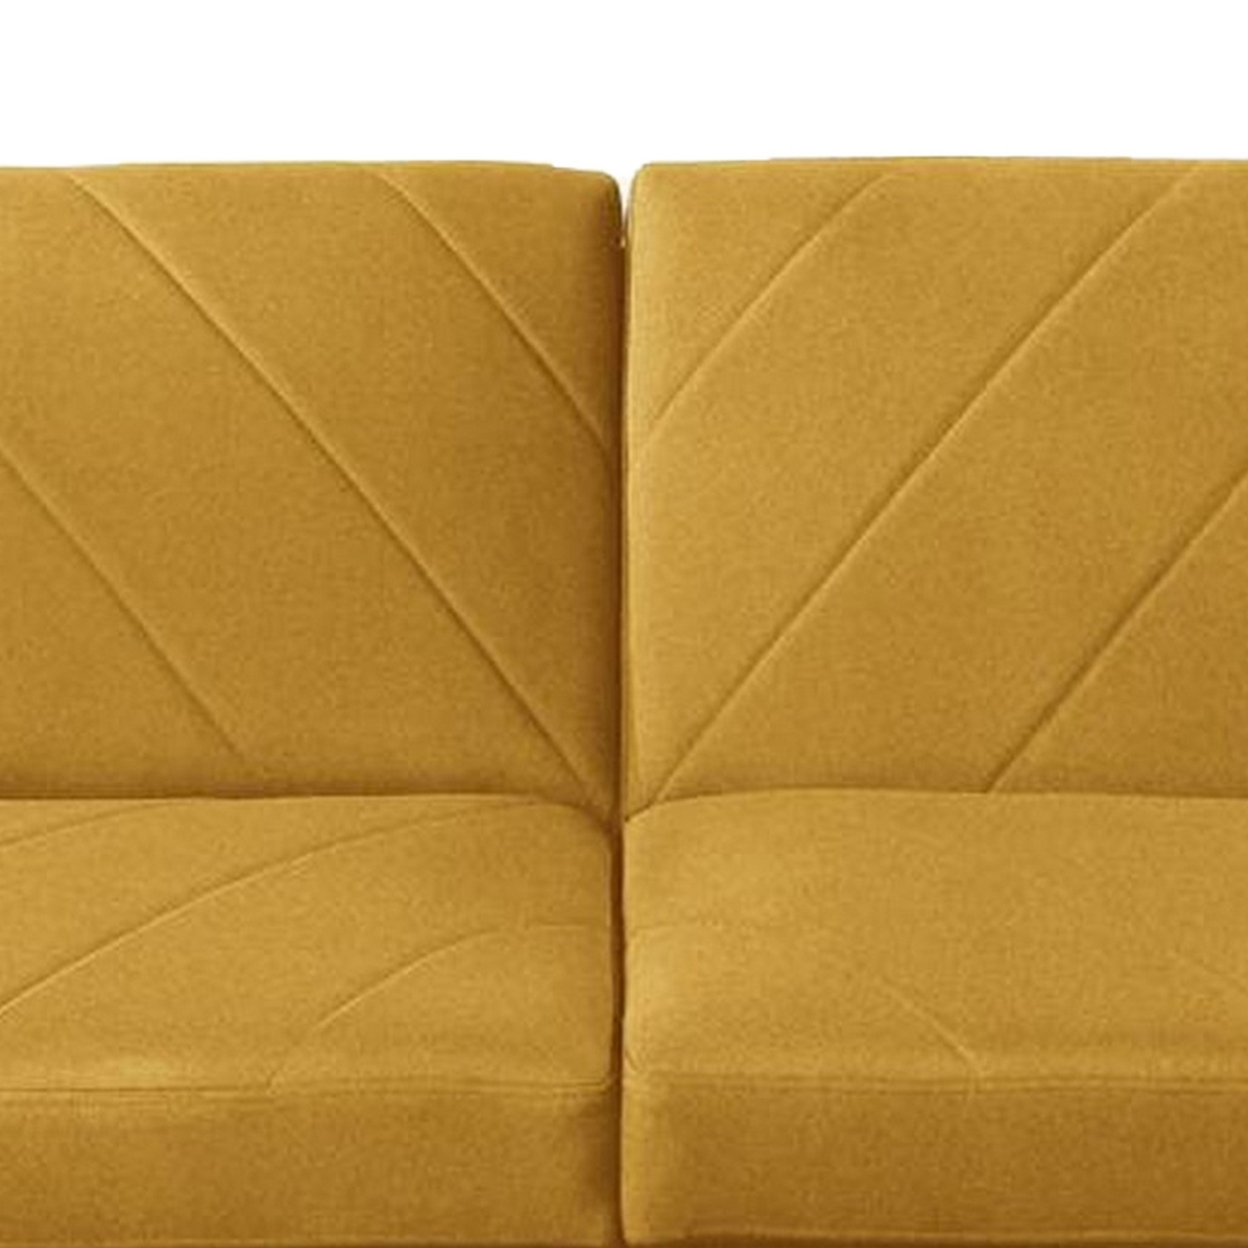 Fabric Adjustable Sofa With Chevron Pattern And Splayed Legs, Yellow- Saltoro Sherpi